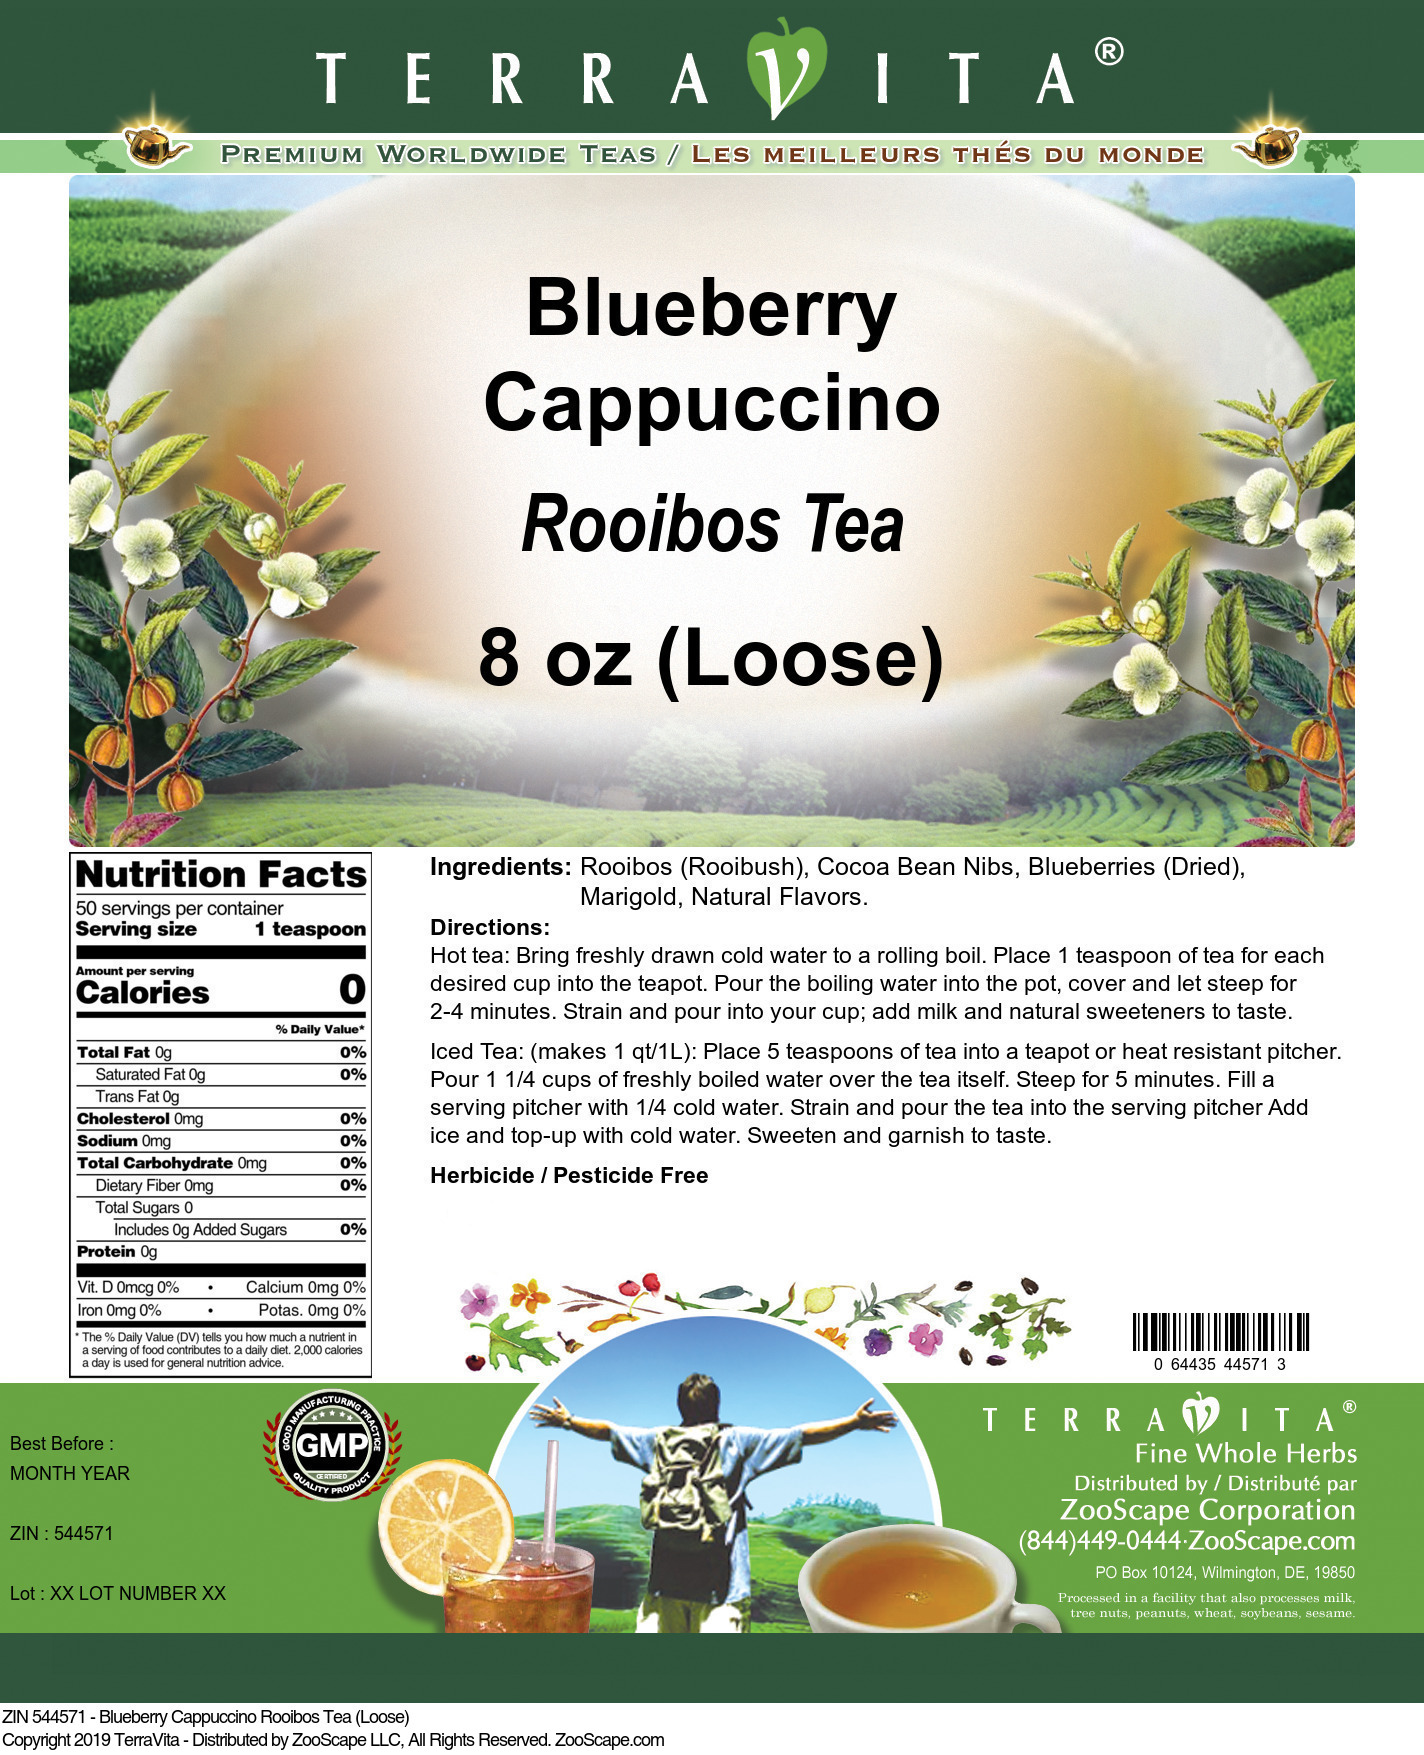 Blueberry Cappuccino Rooibos Tea (Loose) - Label